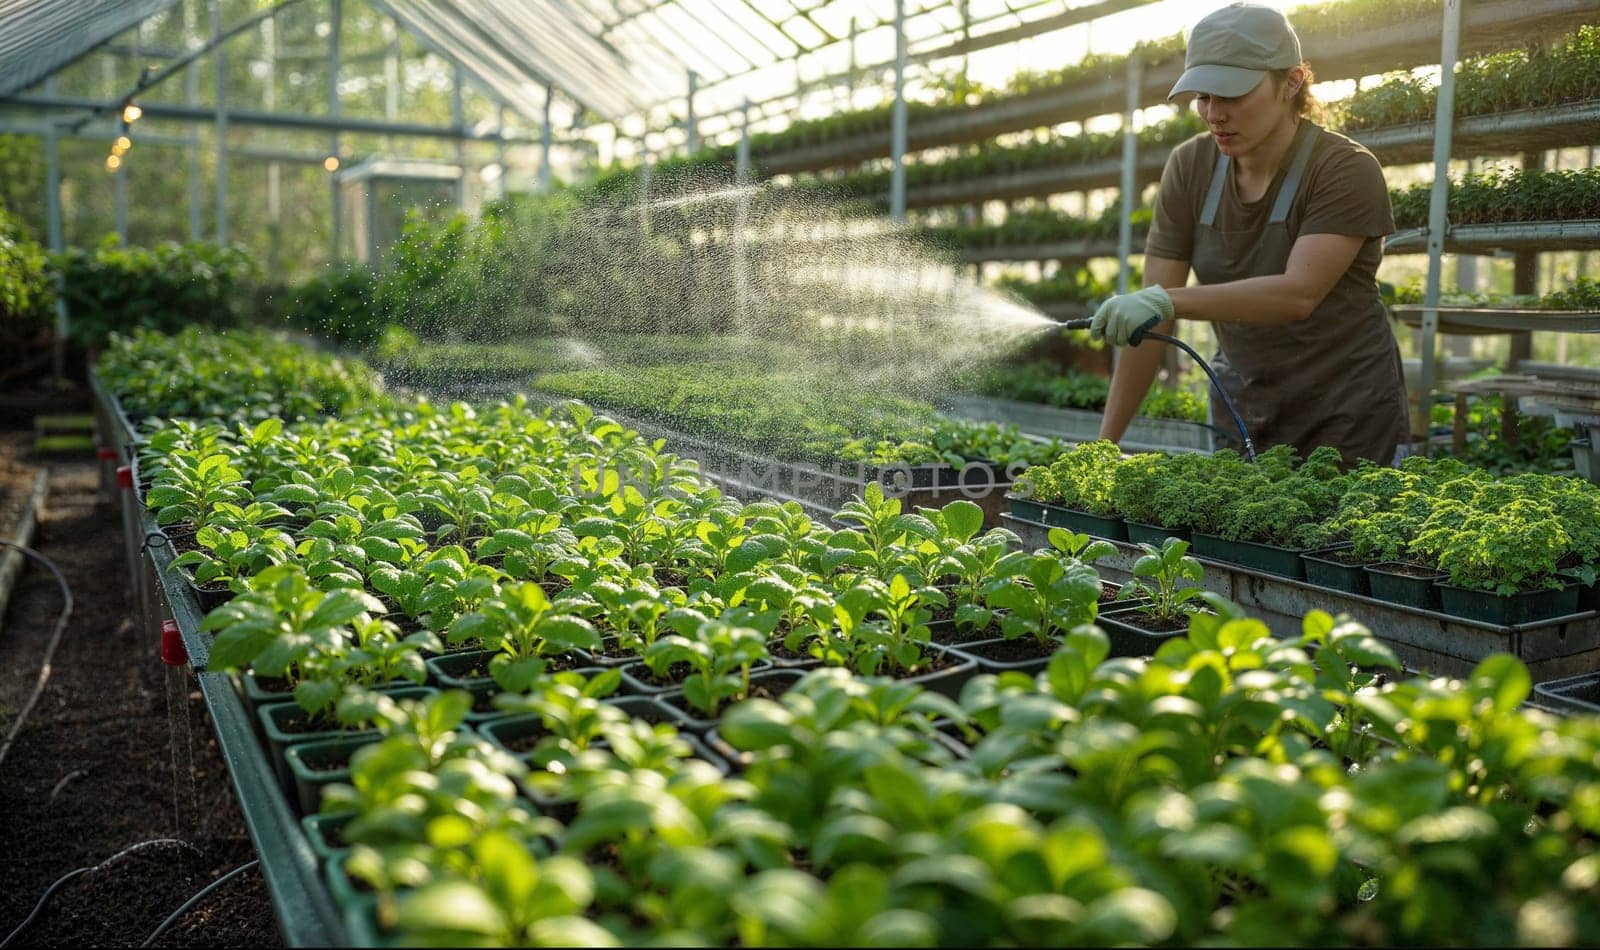 Gardener watering seedlings in a sunny modern greenhouse by evdakovka